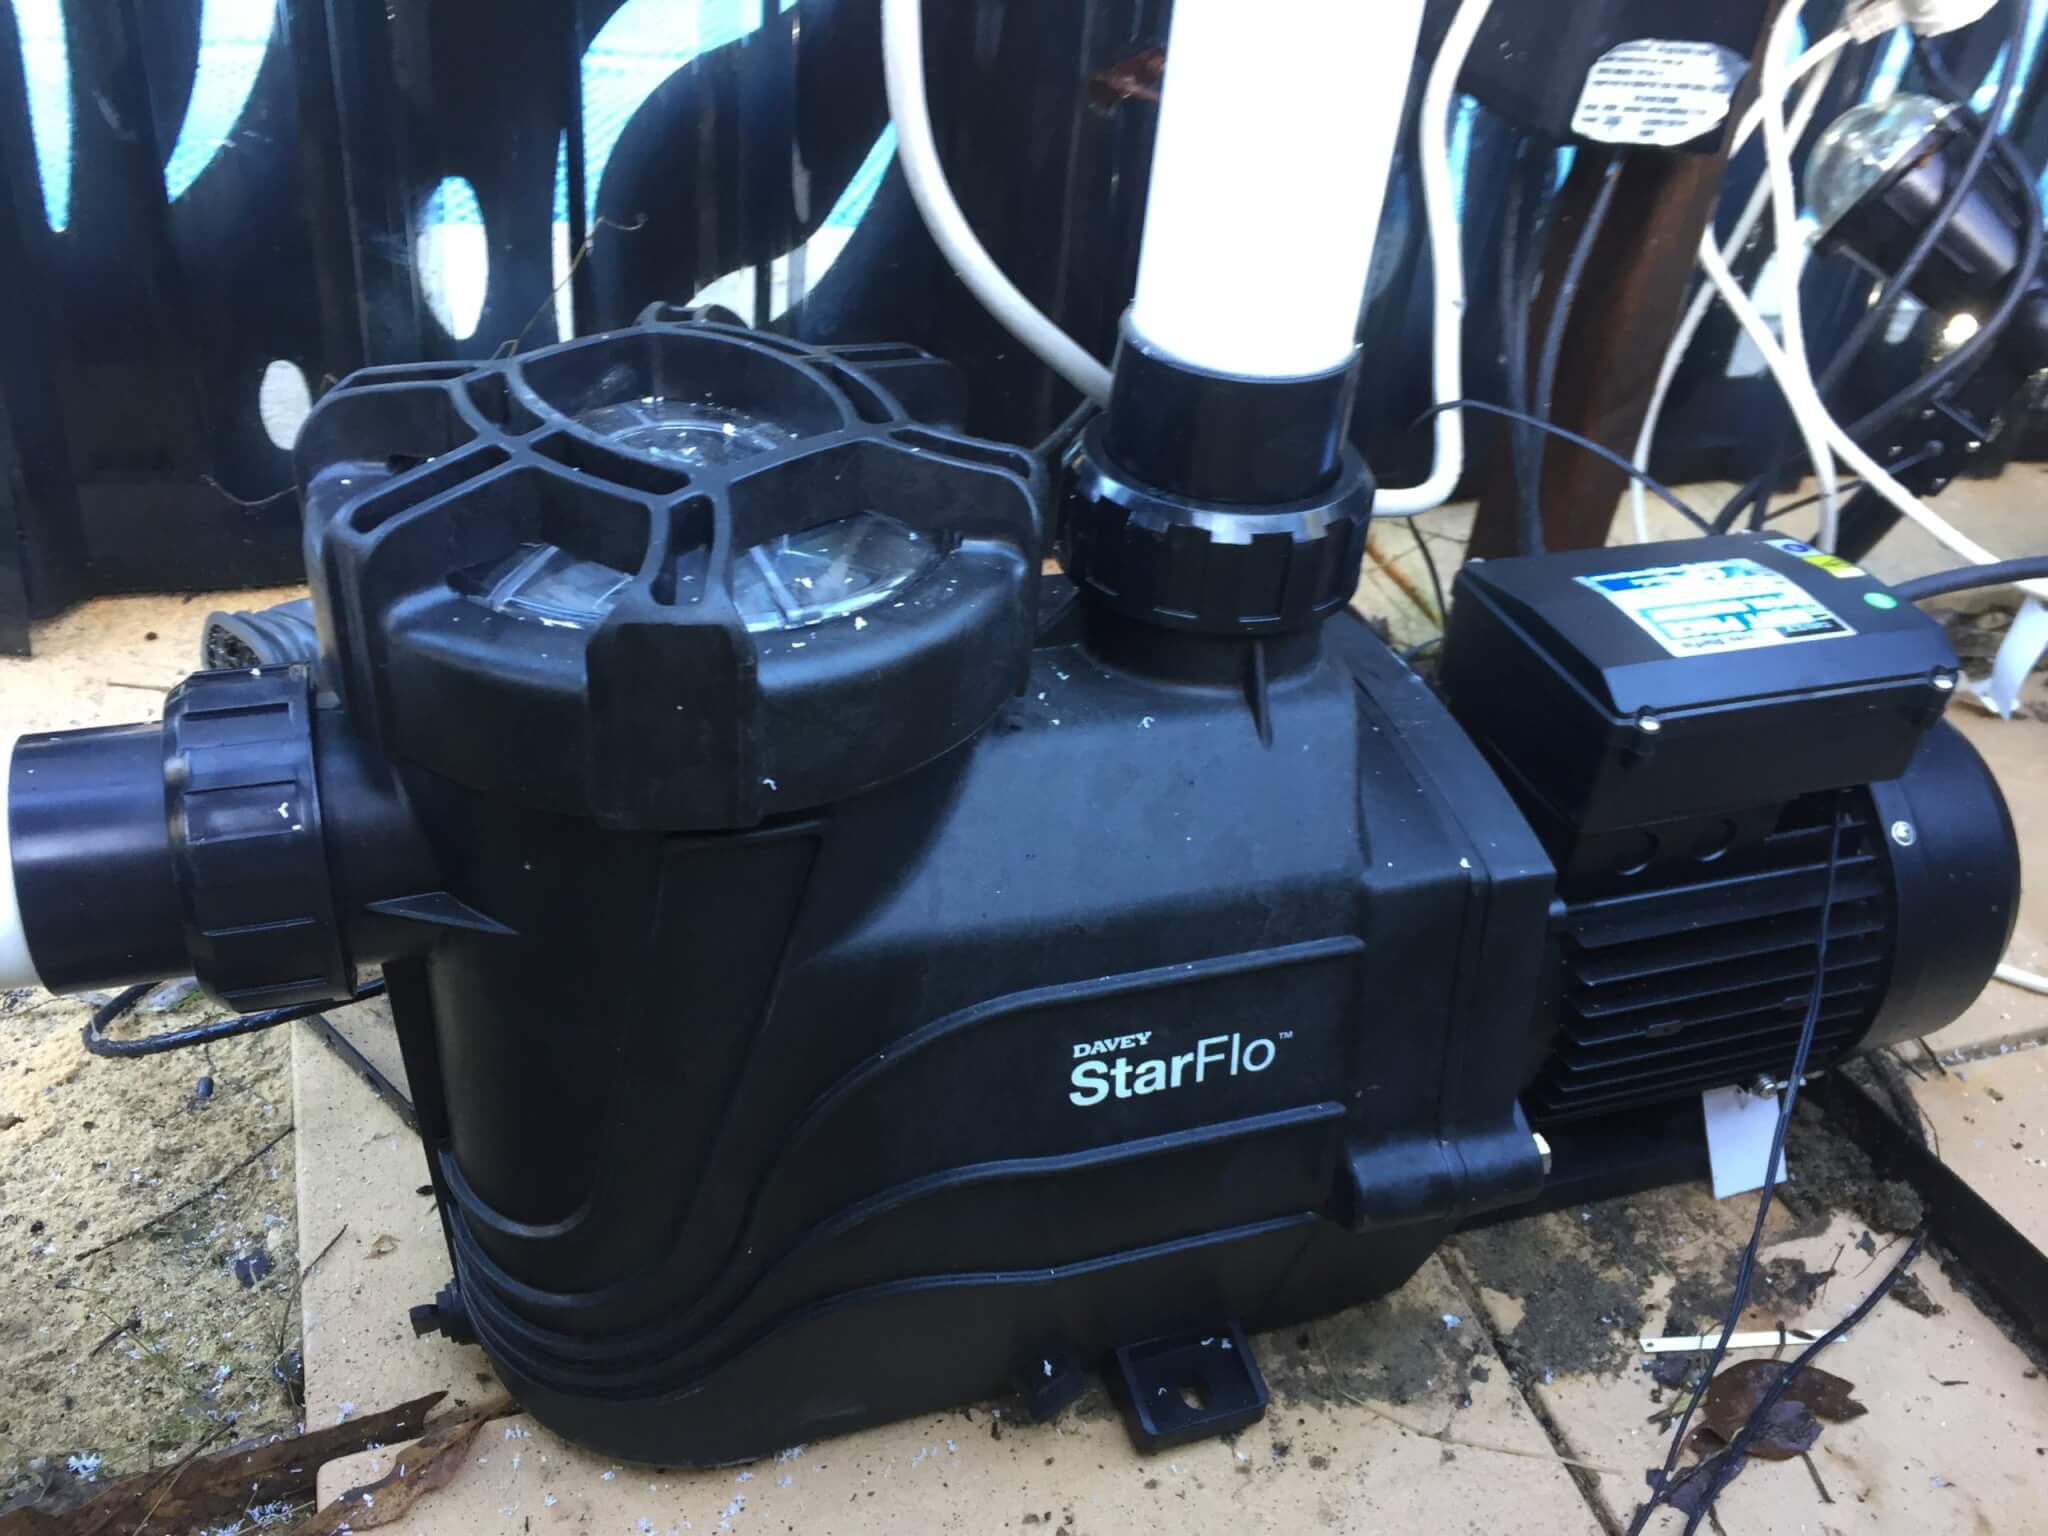 Black Davey StarFlo pool pump installation.